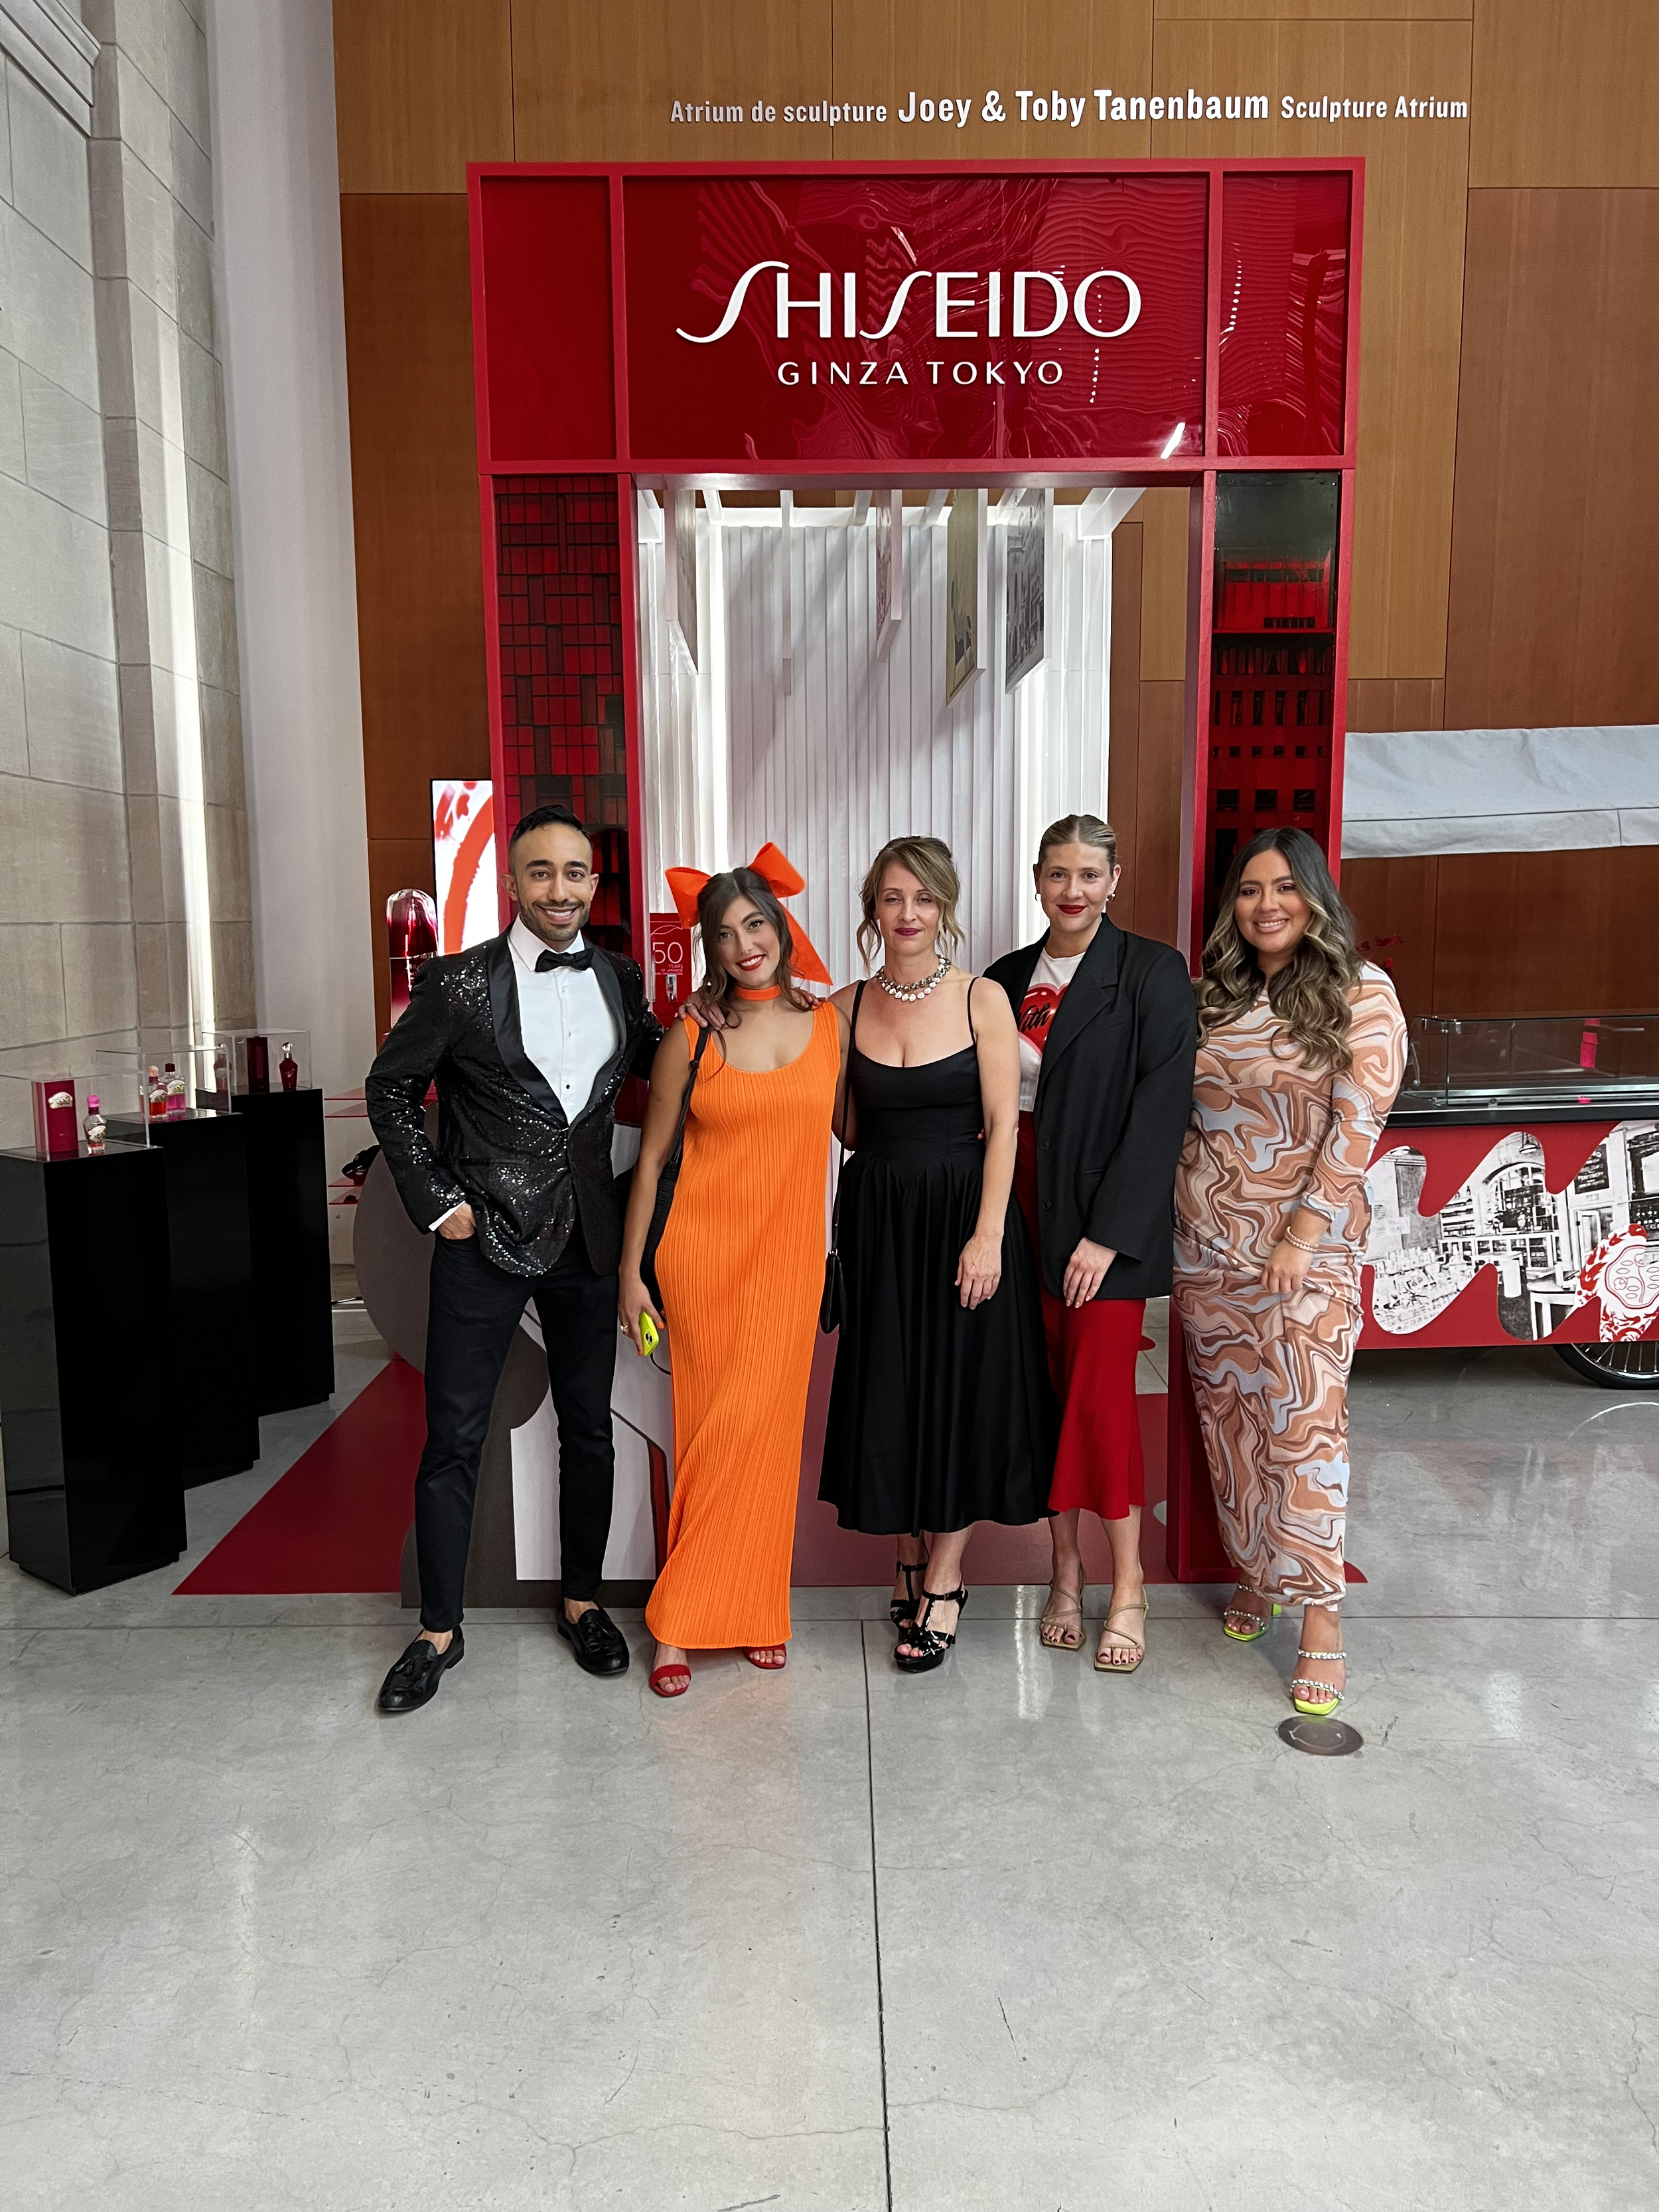 Shiseido-AGO-150th-Anniversary-Installation-Brand-Partnerships-Sponsorships-23-Art-Installation-Devon-Toronto.png